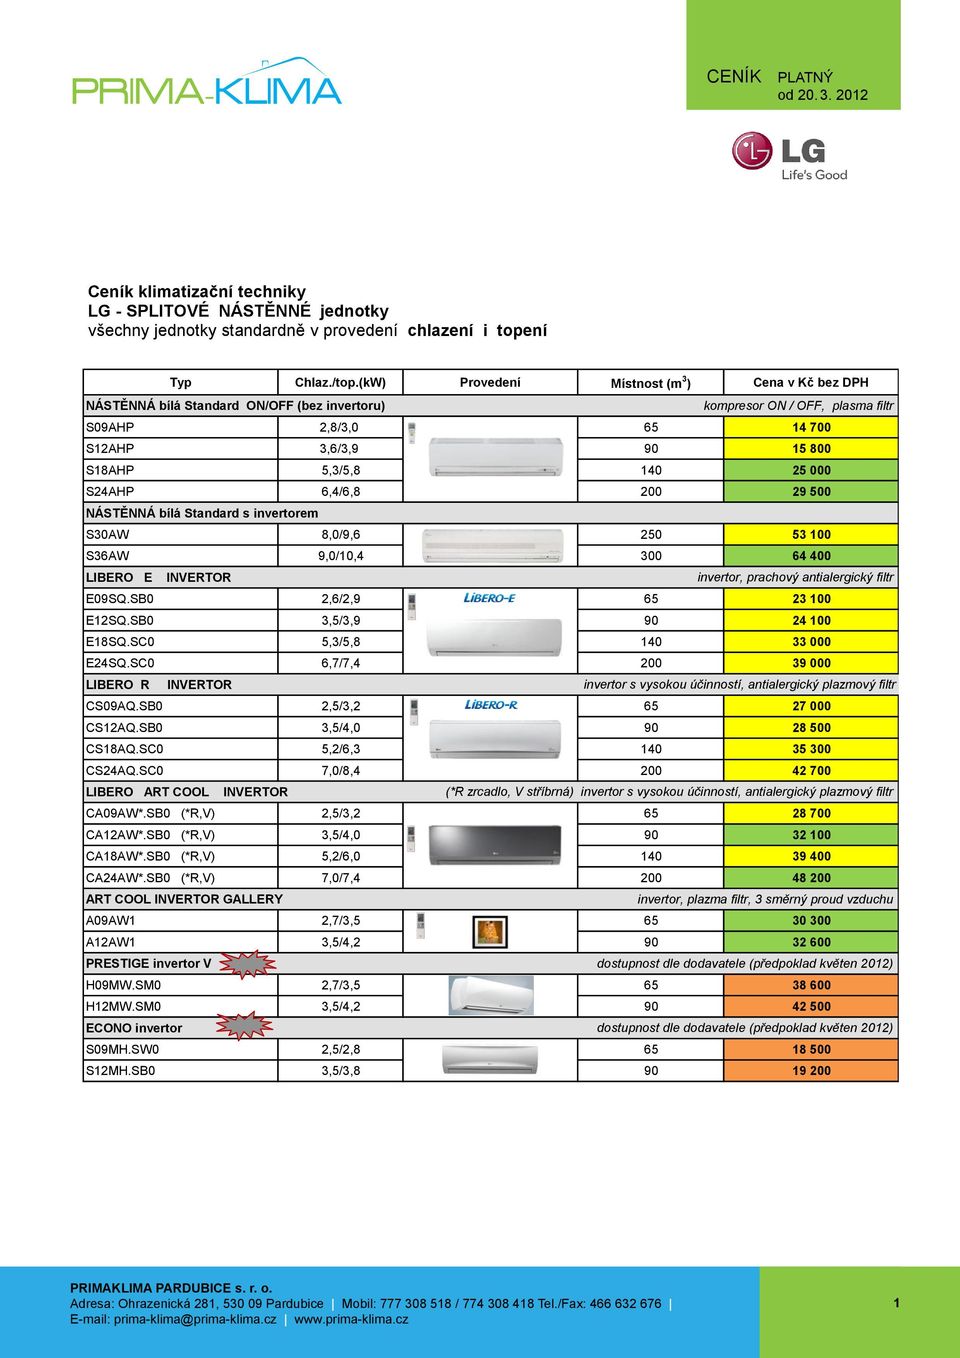 ) Cena EU NÁSTĚNNÁ bílá Standard ON/OFF (bez invertoru) kompresor ON / OFF, plasma filtr PVRCUSZ0 (pro synchro jednotky) S09AHP 2,8/3,0 65 Jednoduchý 4 drátový 700 ovladač S2AHP 3,6/3,9 90 PQRCVCL0Q